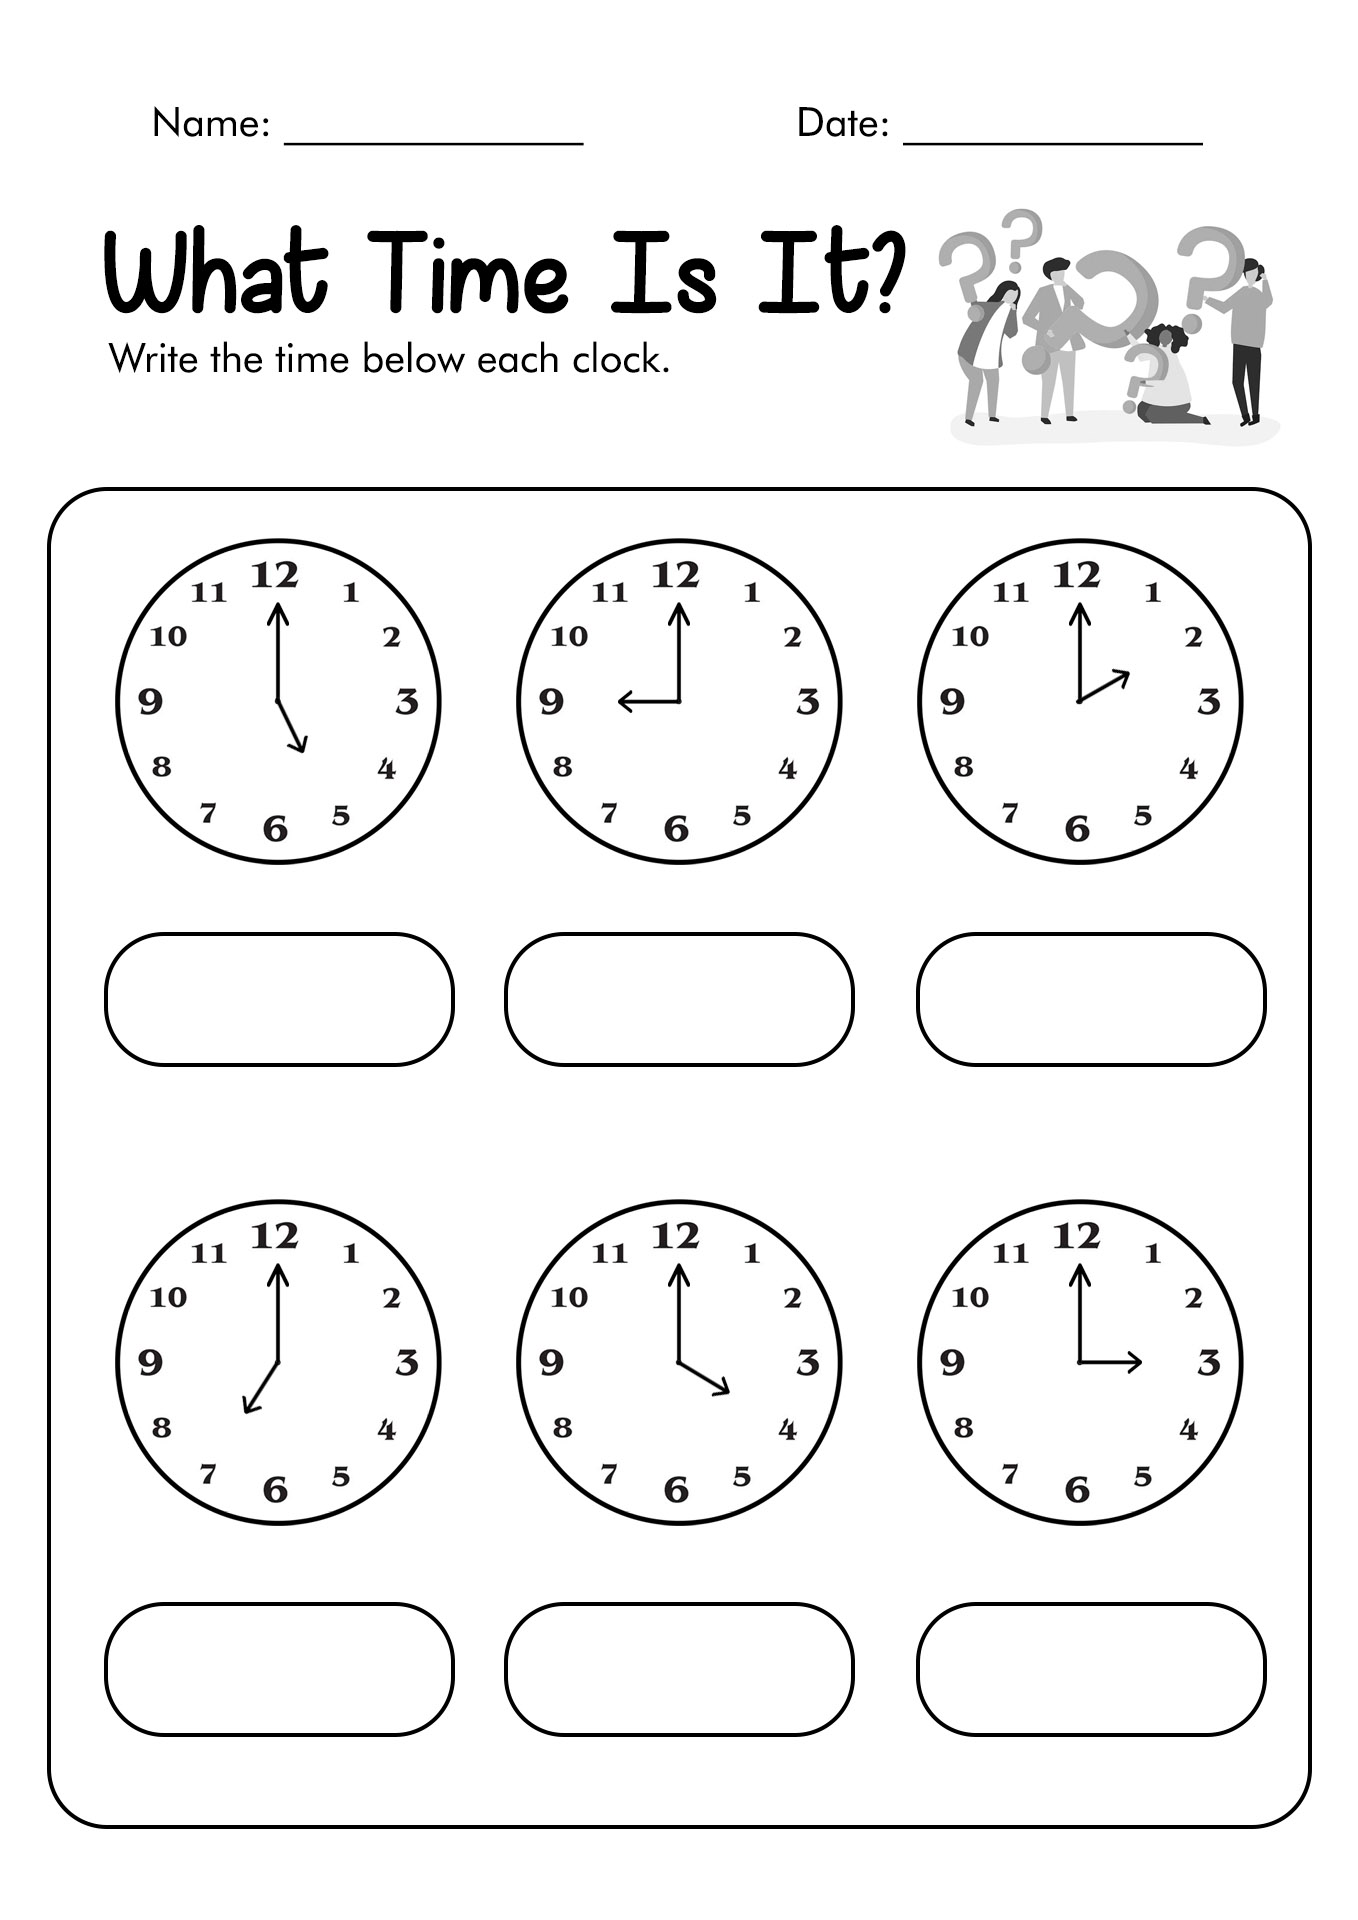 Printable Telling Time Worksheets for Kids